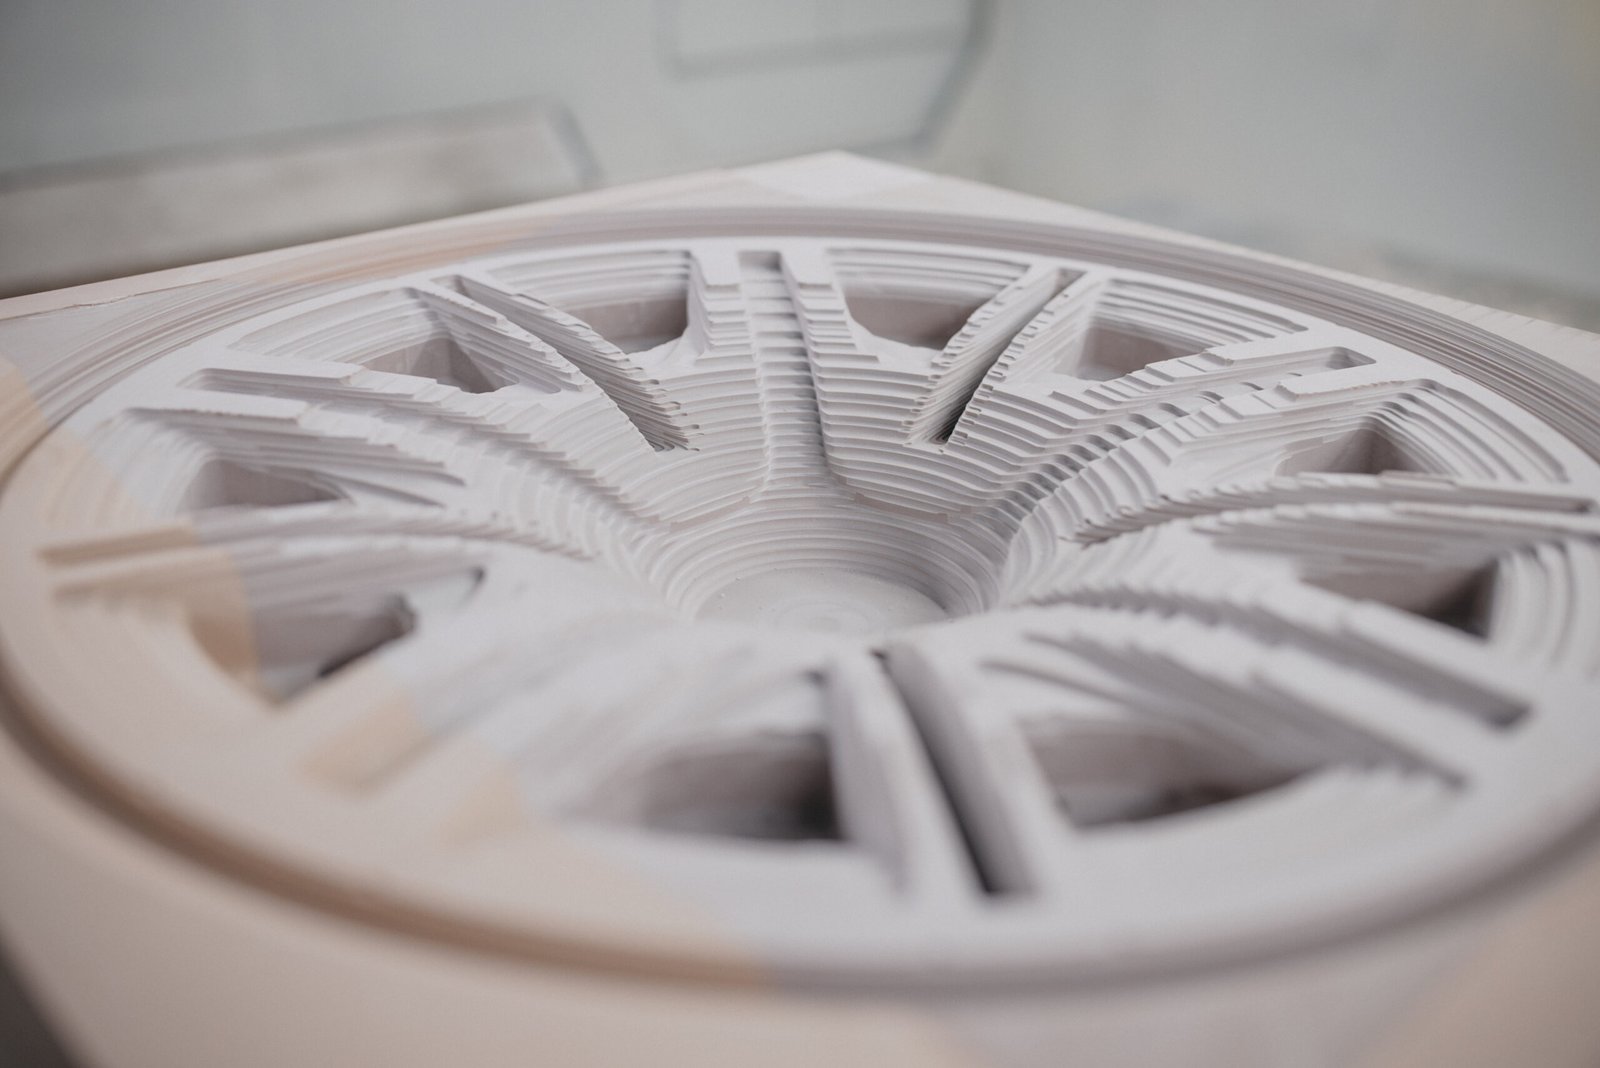 Reinvent the wheel? "FelGAN" inspires new rim designs with AI